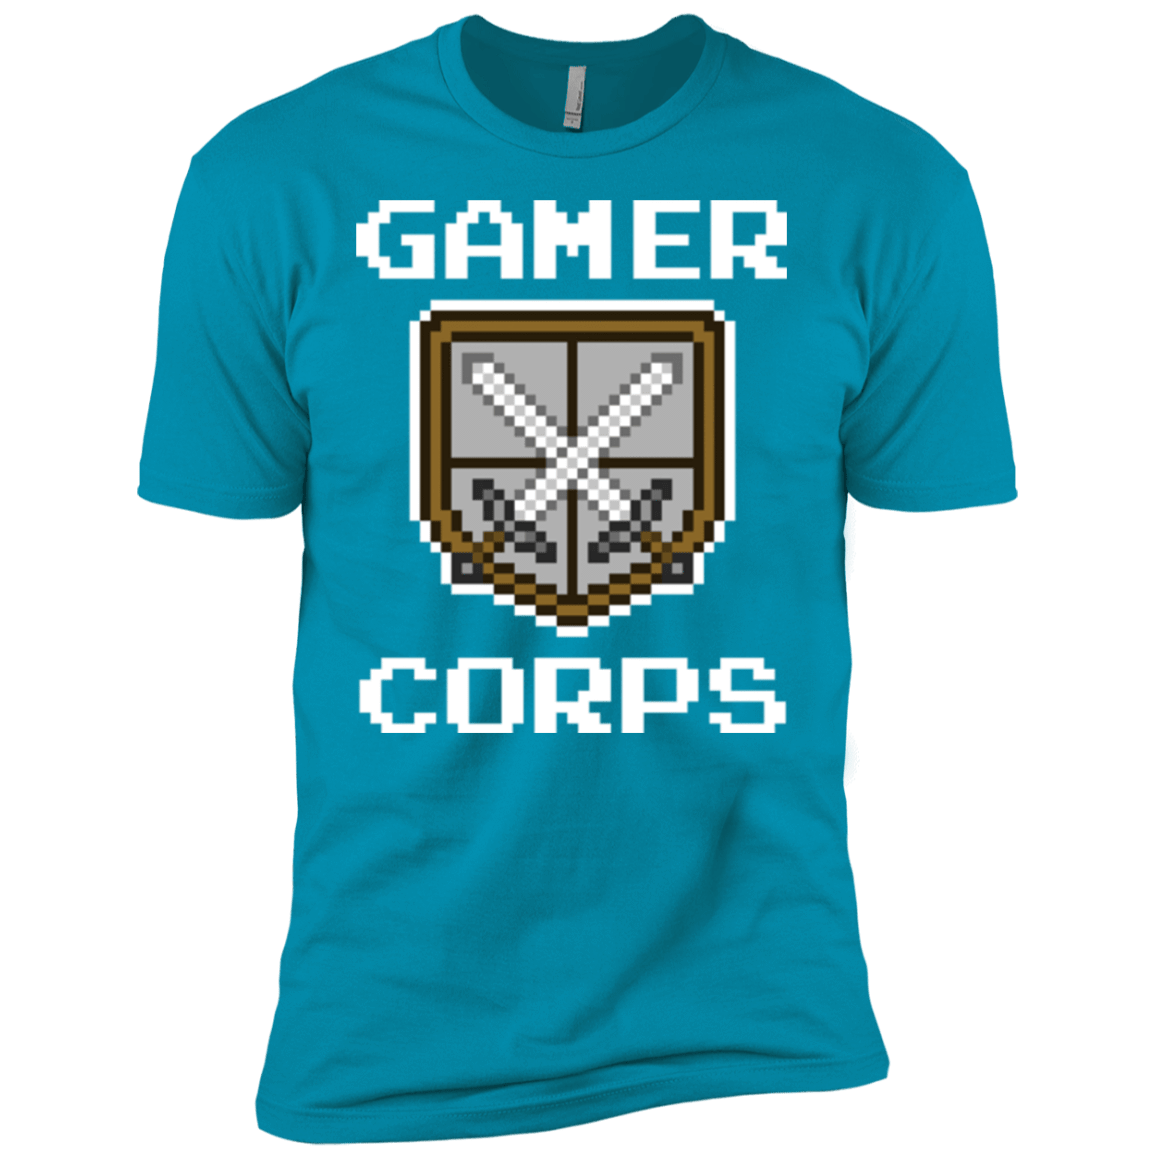 T-Shirts Turquoise / YXS Gamer corps Boys Premium T-Shirt